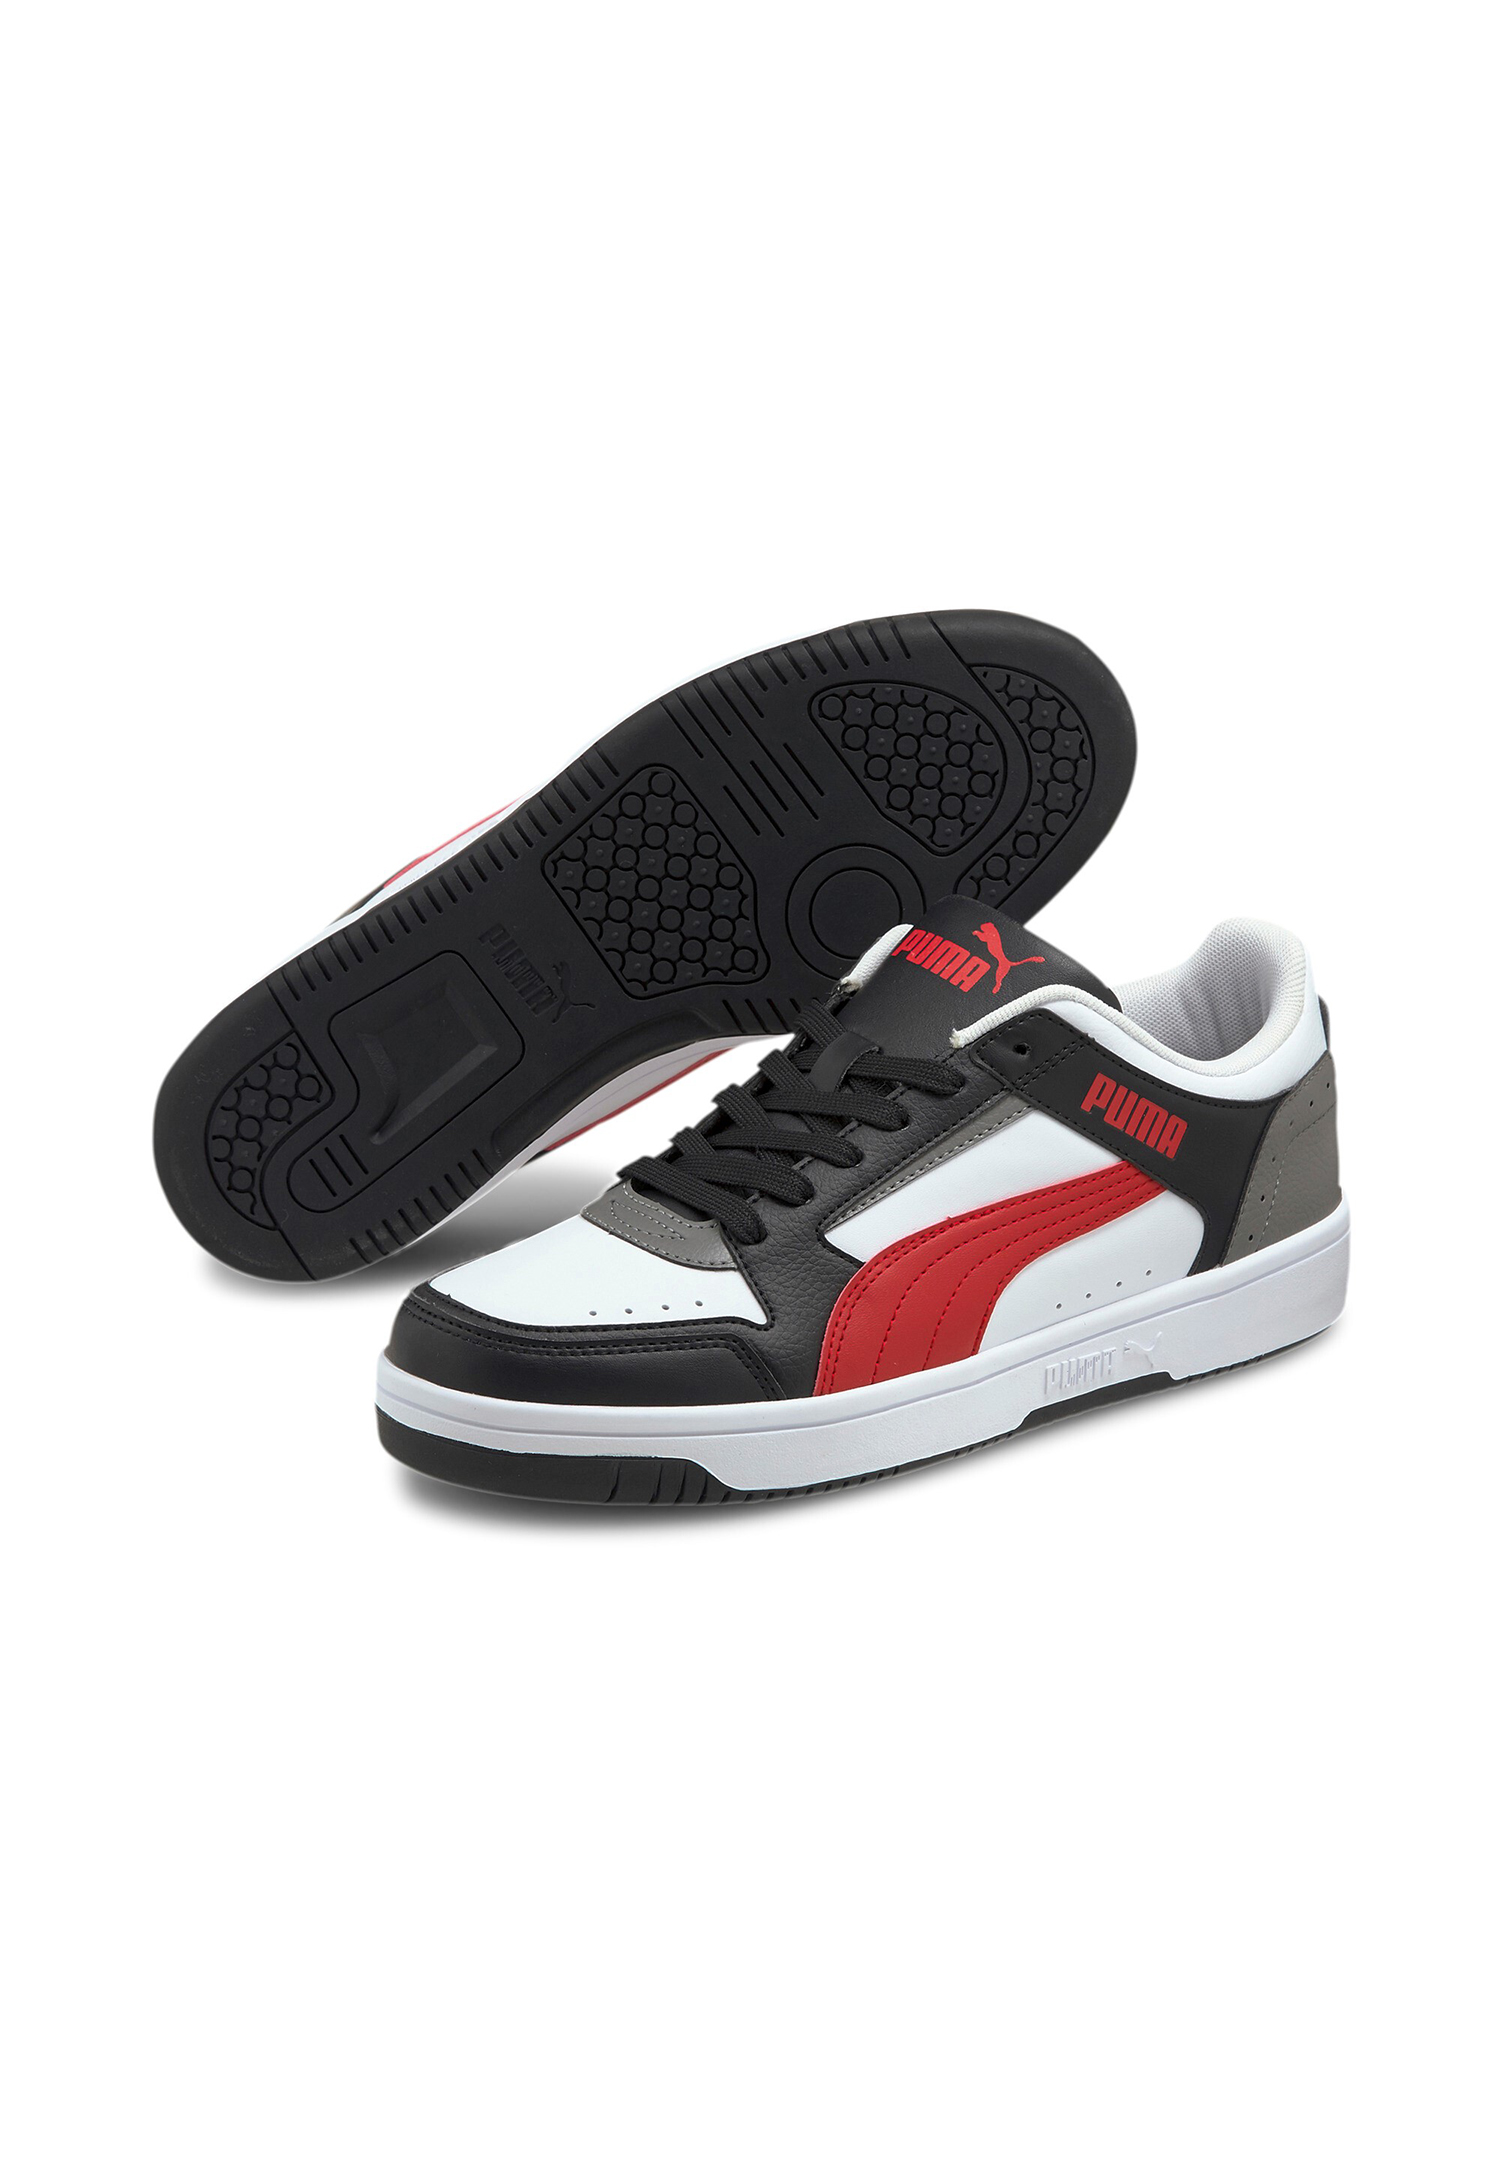 Puma Rebound JOY Low Top Herren Sneaker Sportschuh 380747 weiss rot